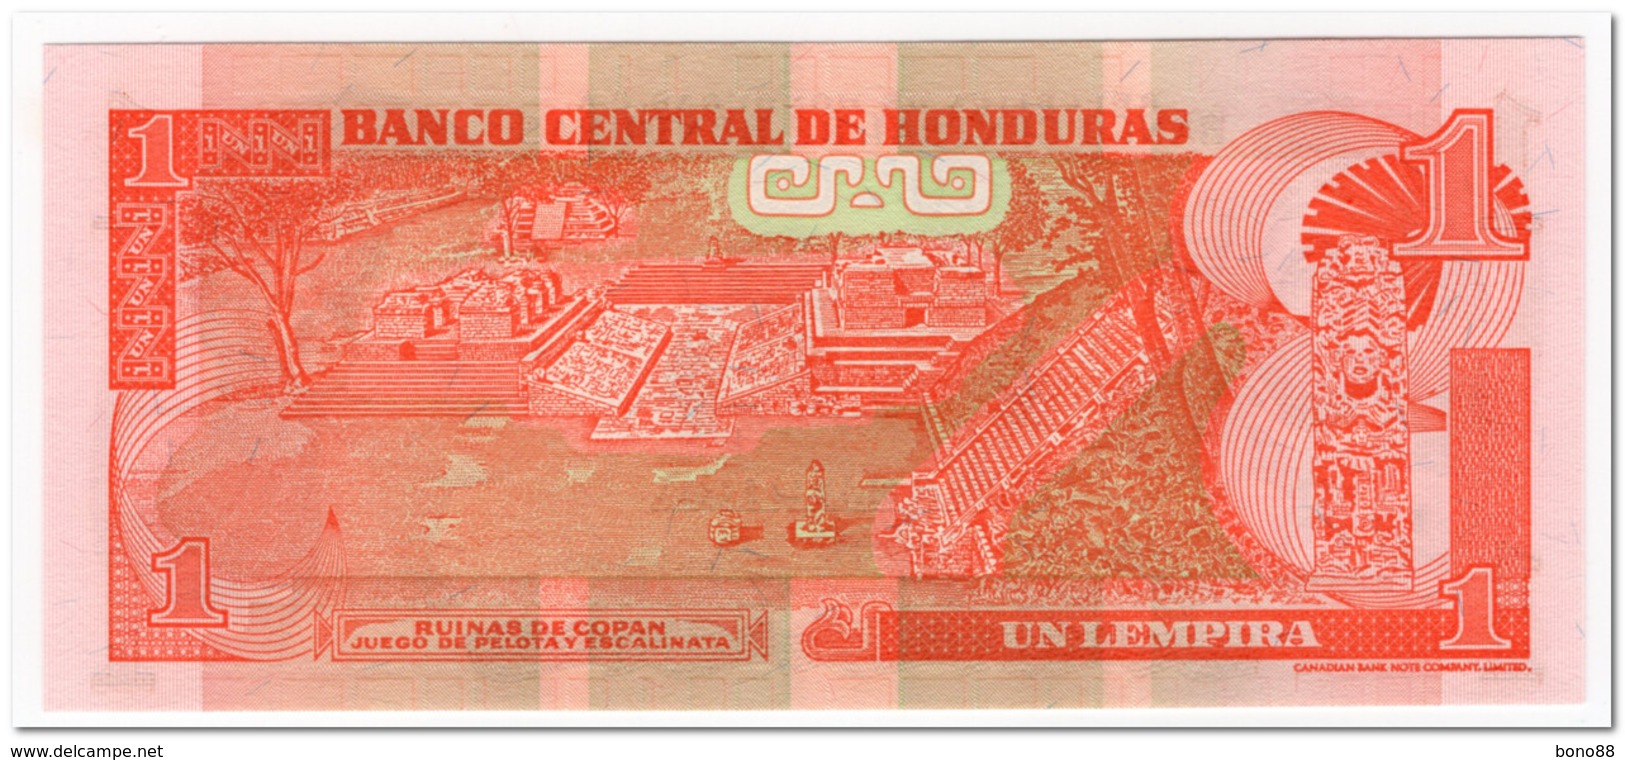 HONDURAS,1 LEMPIRA,2006,P.84,UNC - Honduras